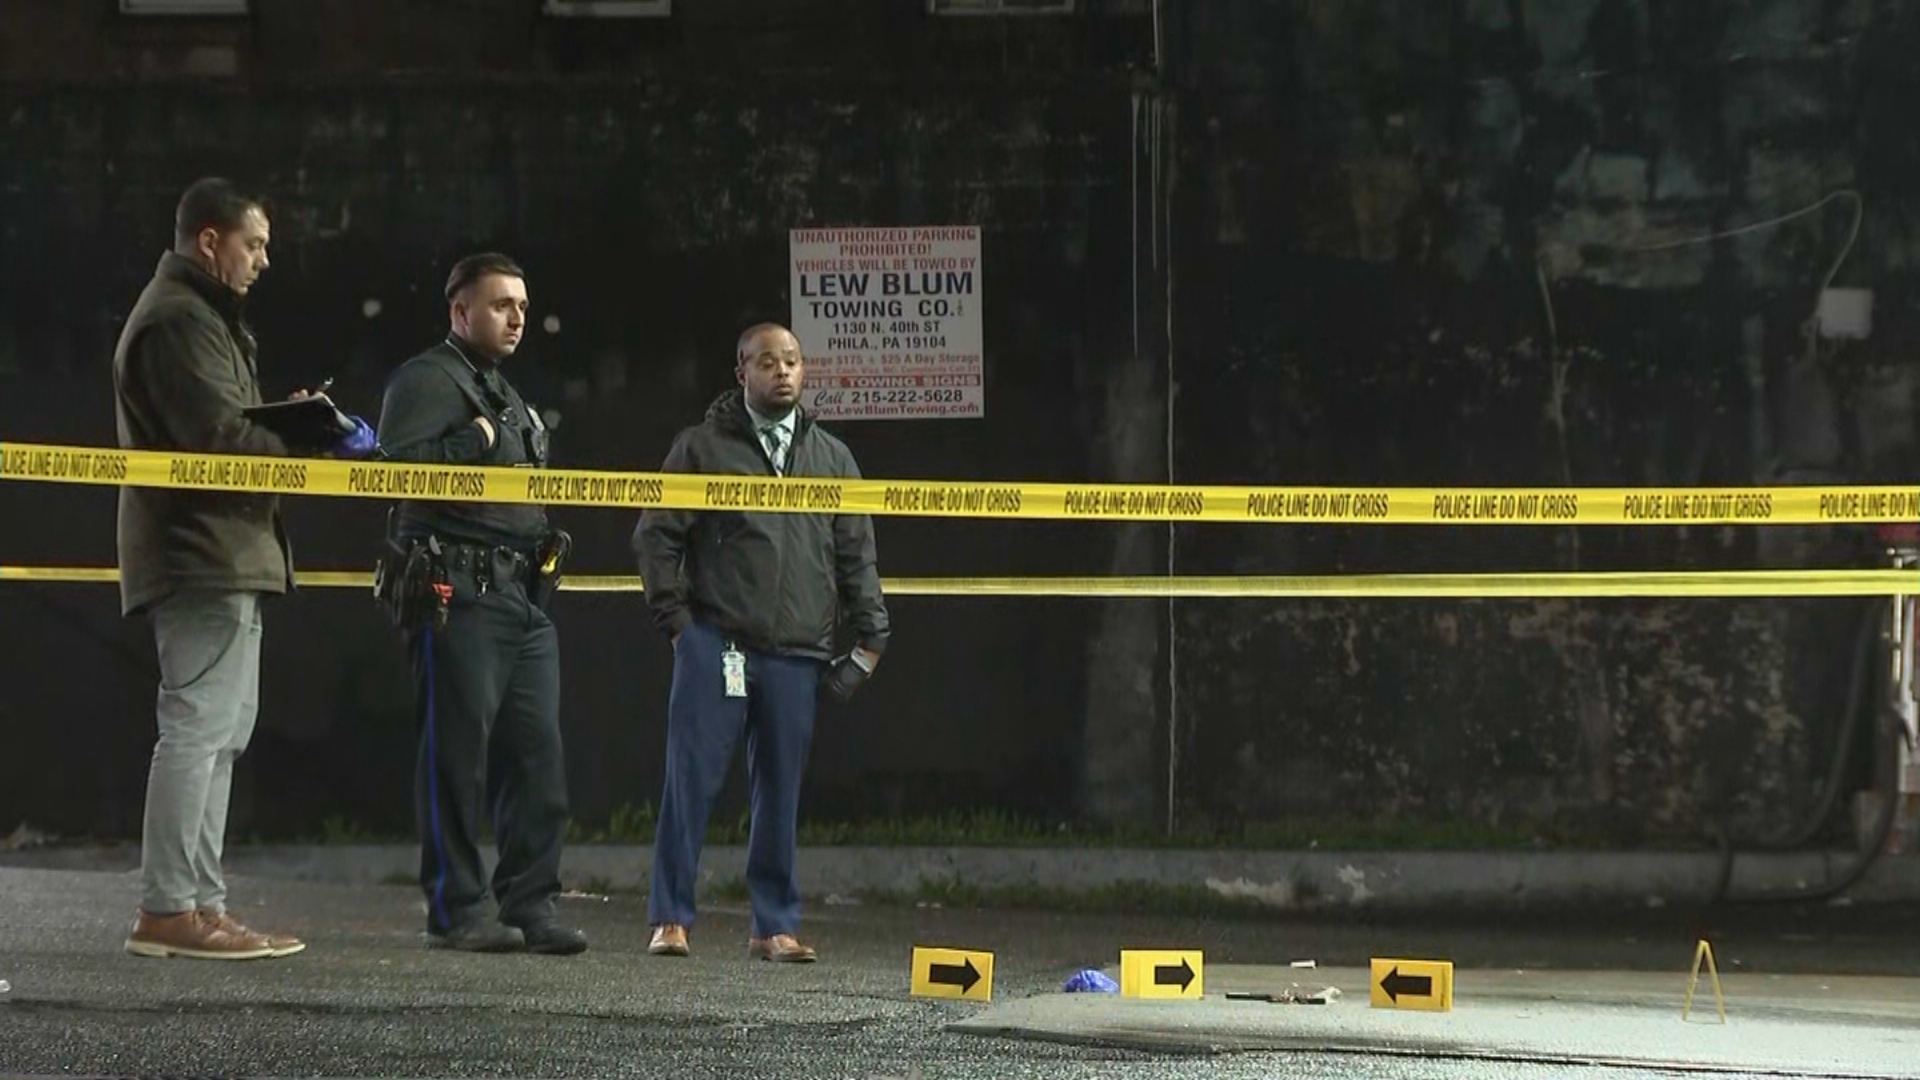 Kingsessing Shooting Leaves Man Critically Injured: Philadelphia Police